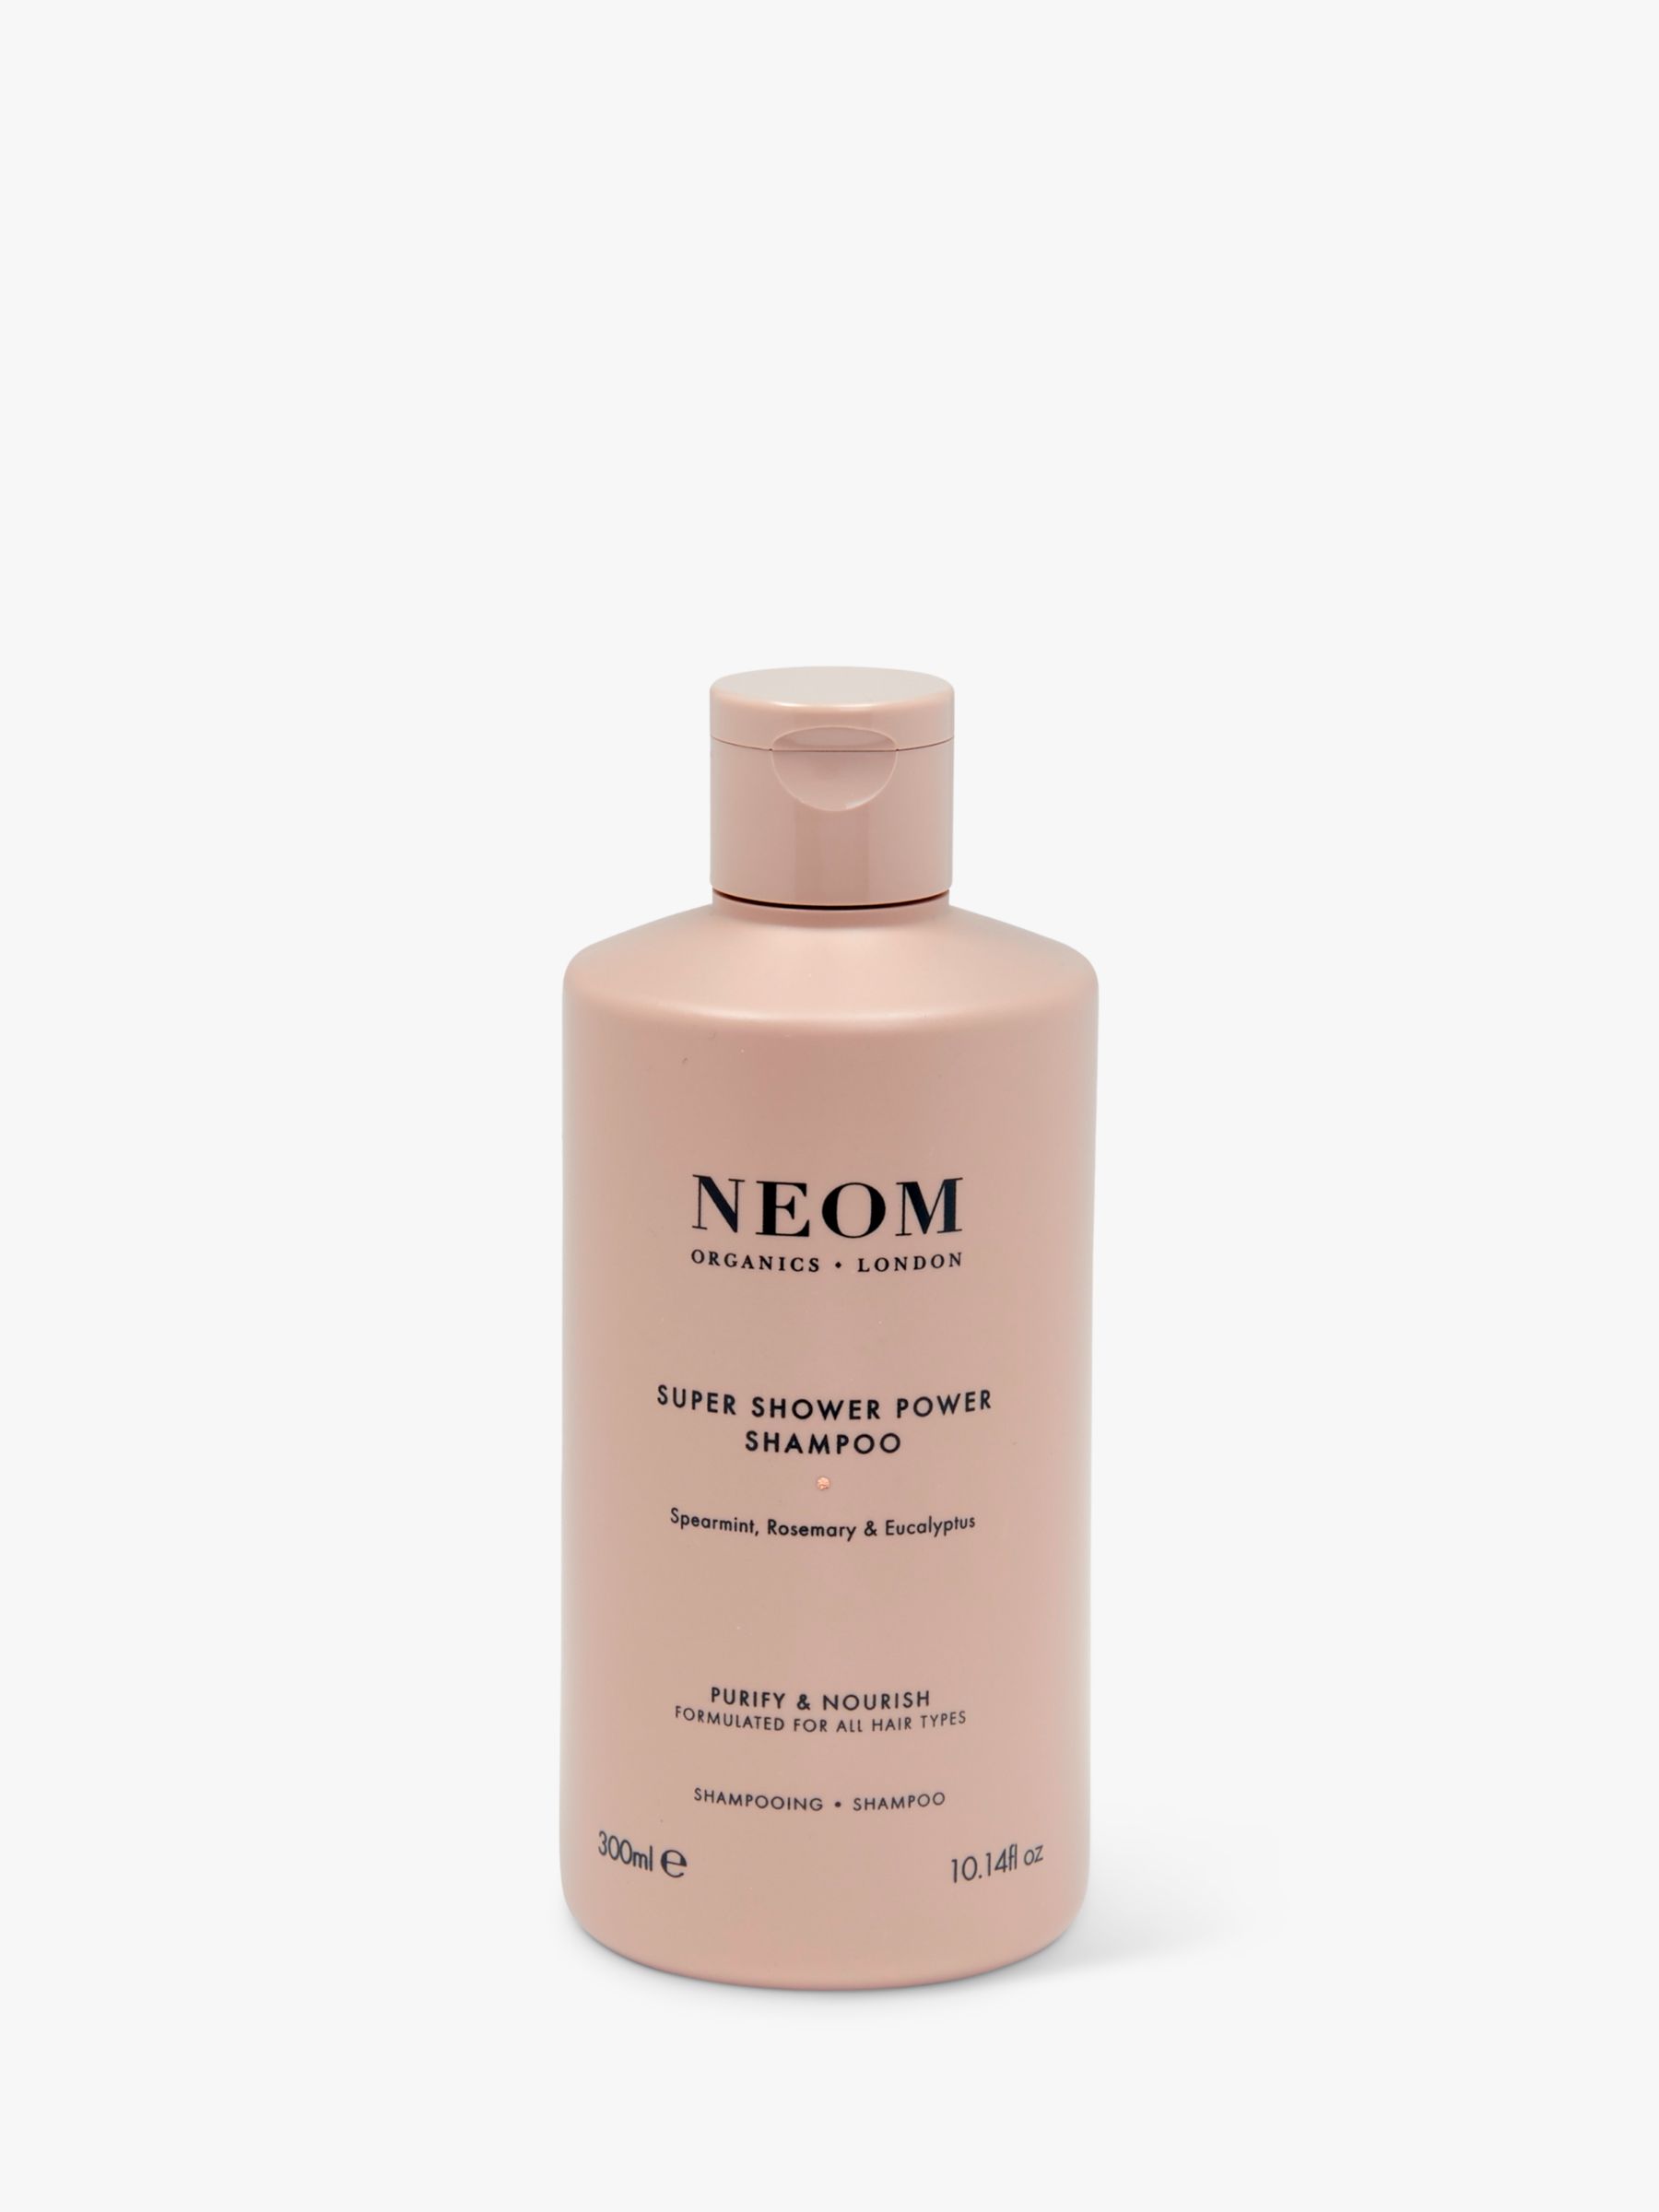 Neom Organics London Super Shower Power Shampoo, 300ml 1